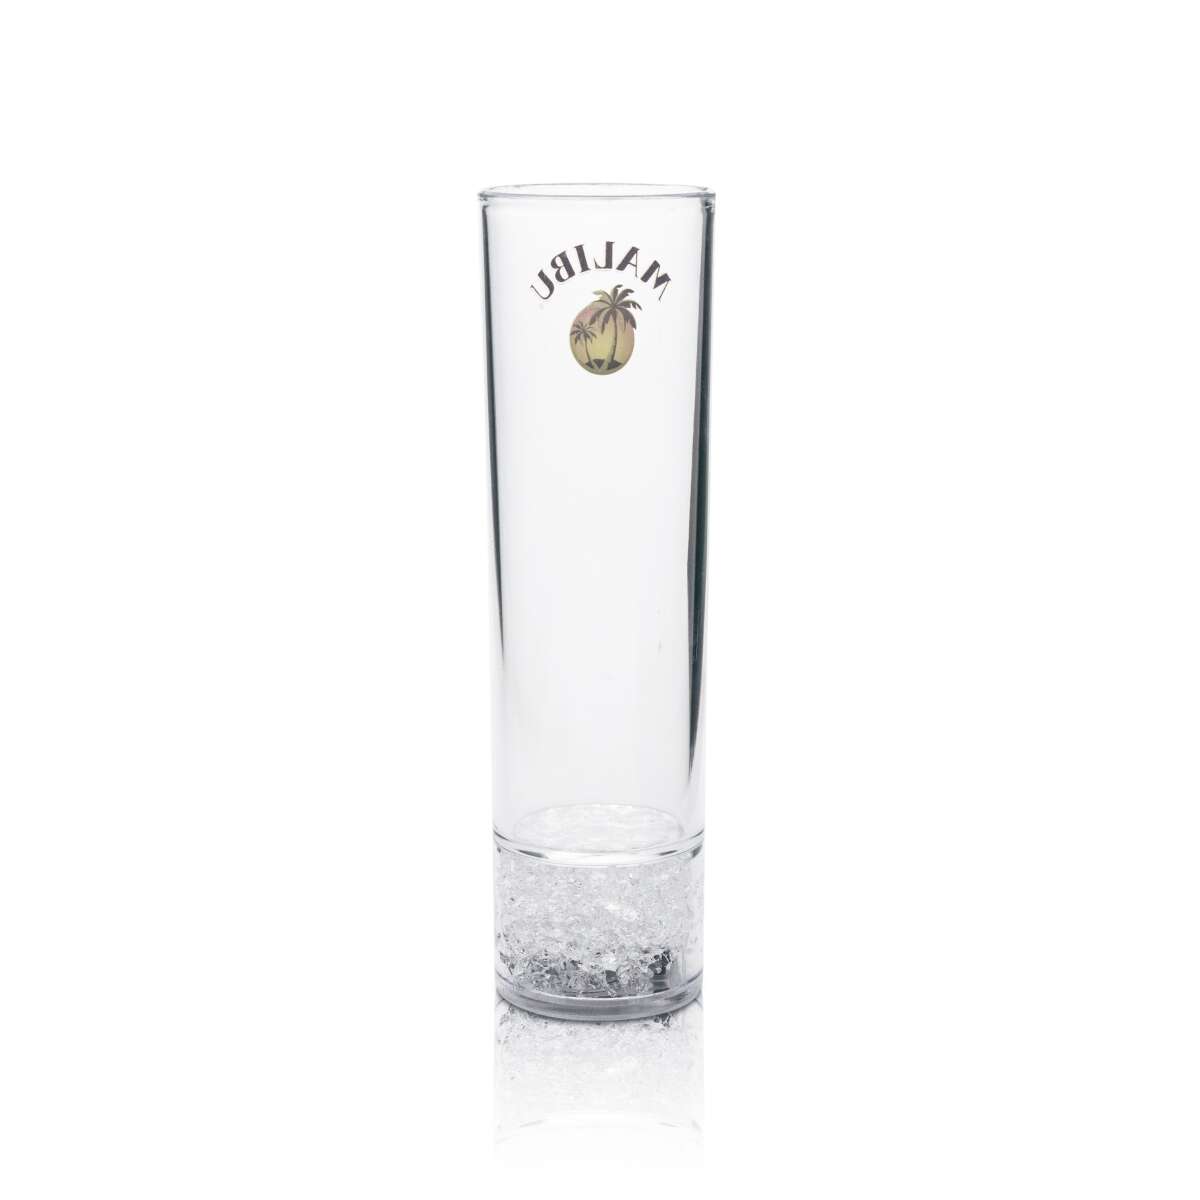 Malibu Likör Glas Becheronline kaufen 